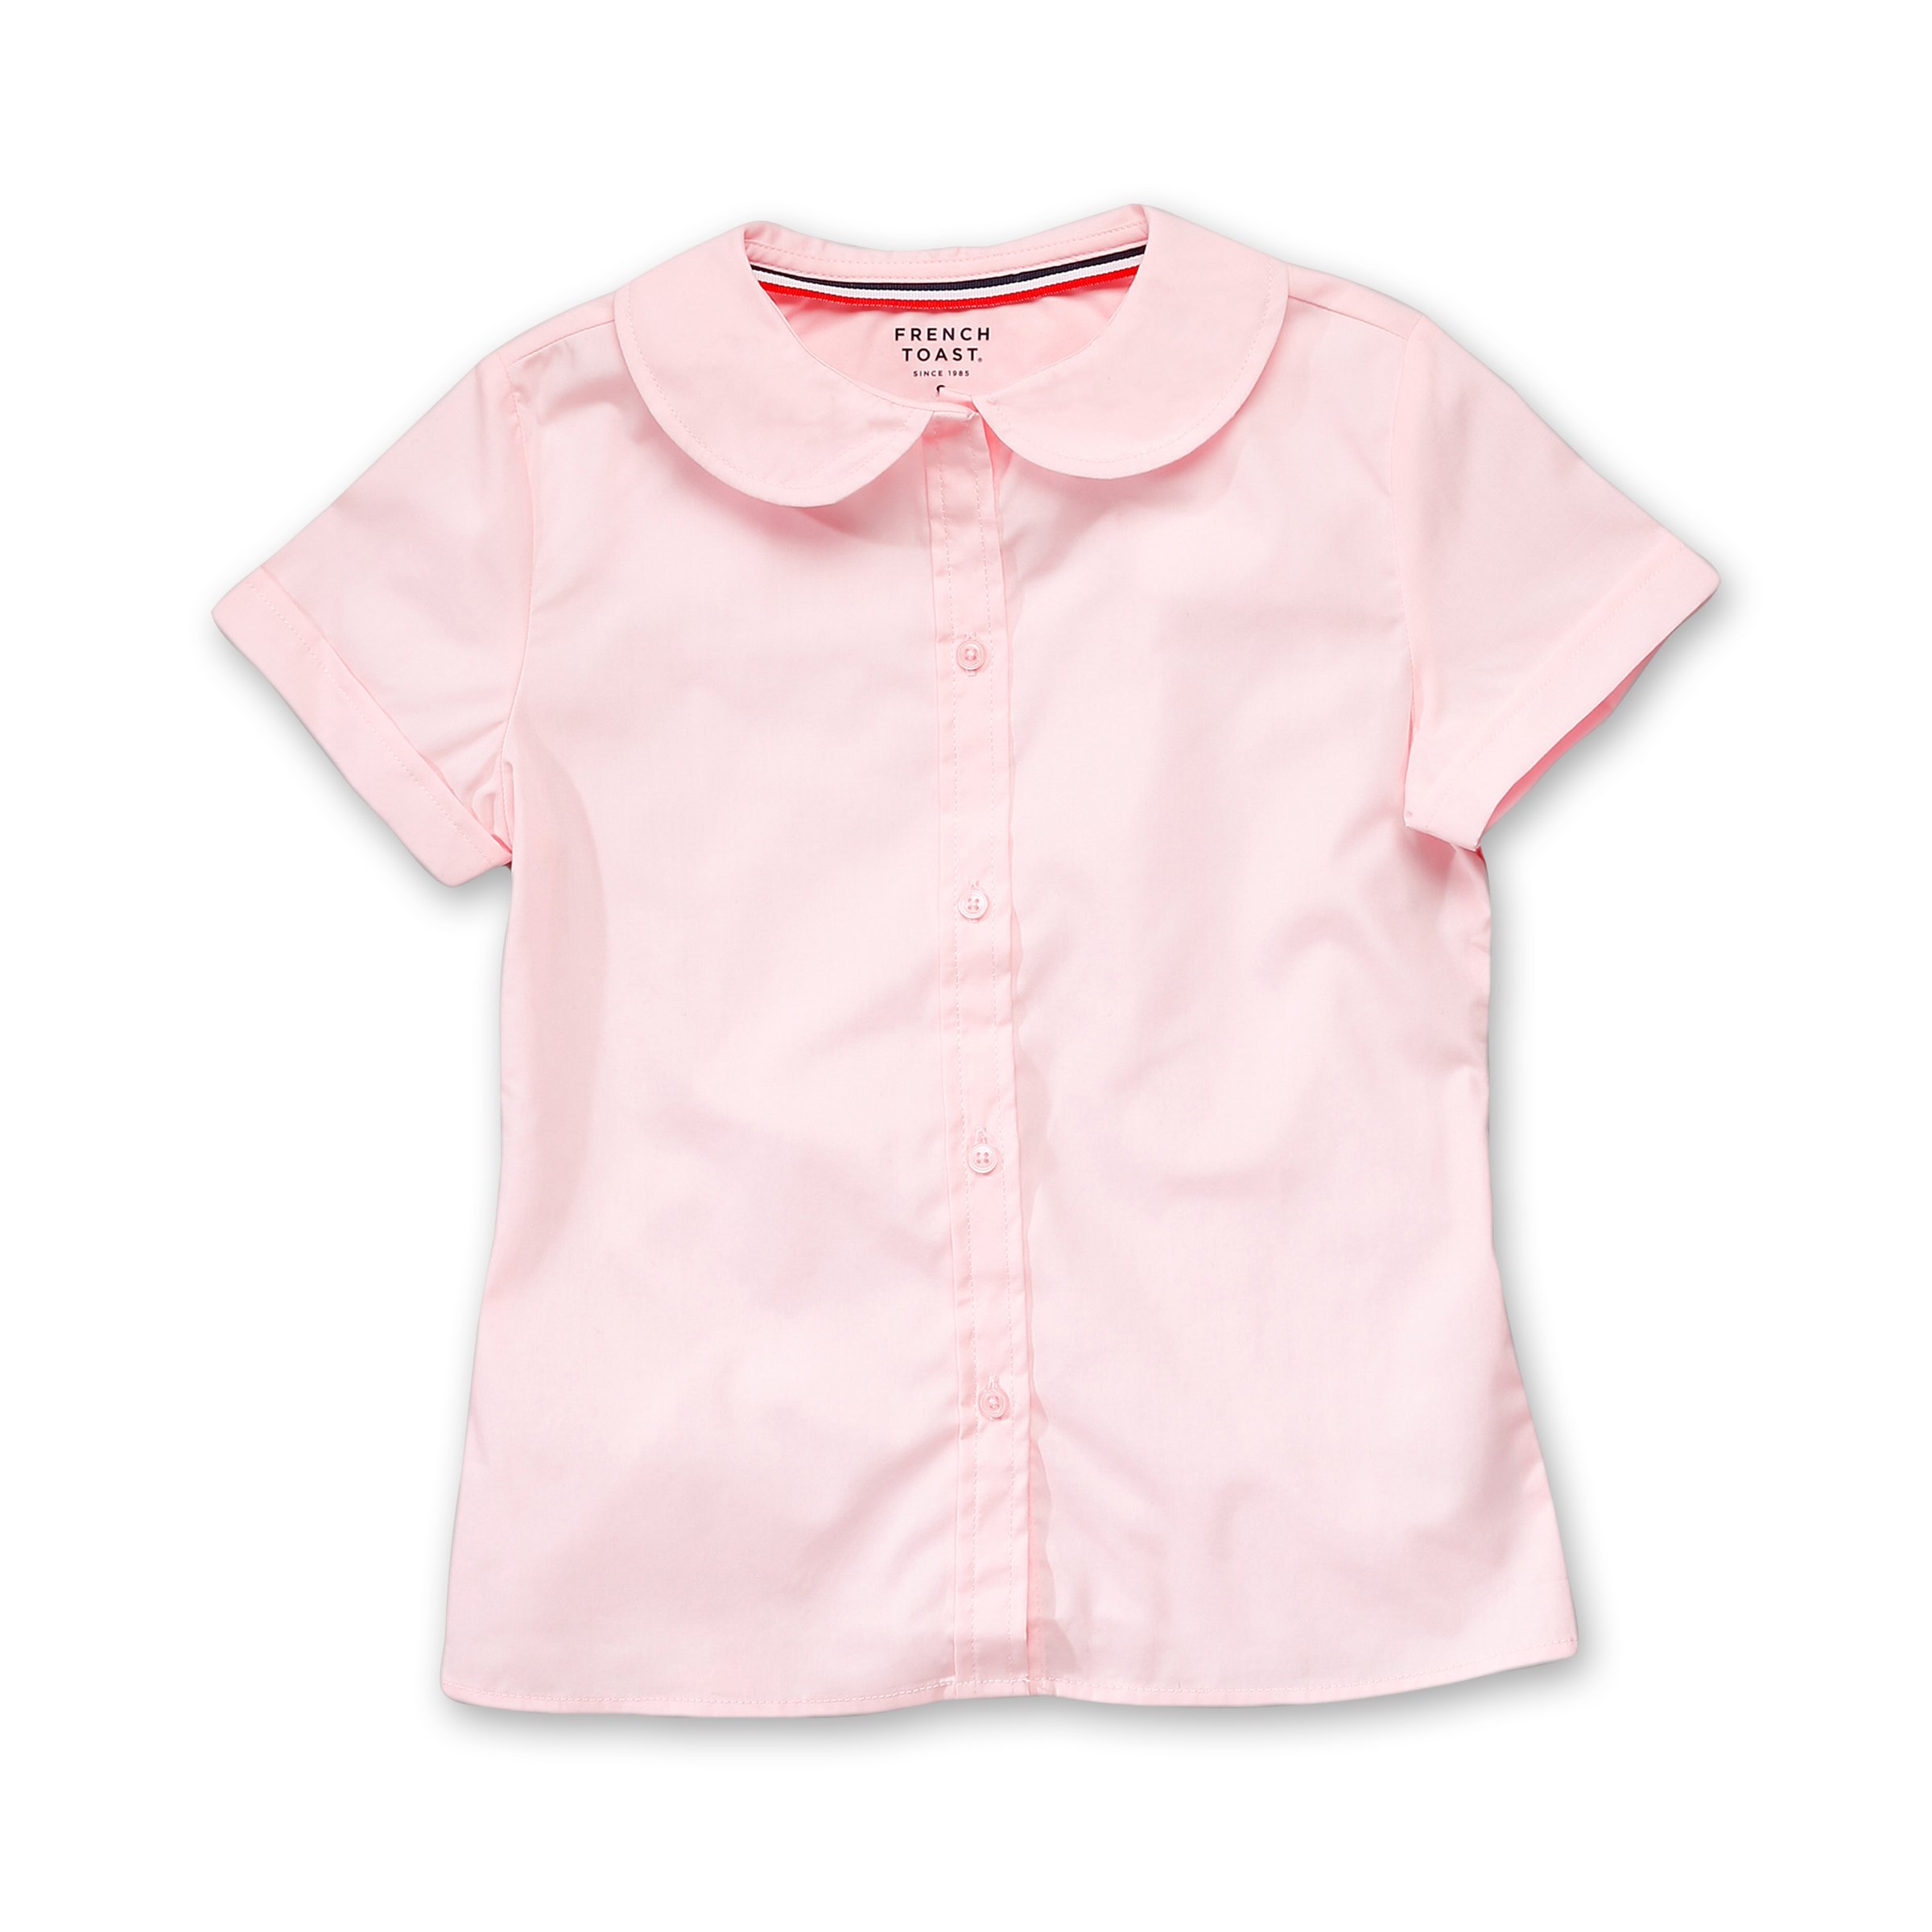 20 Girls French Toast Uniform Light Pink Shirt w/ Peter Pan Collar Size 6X